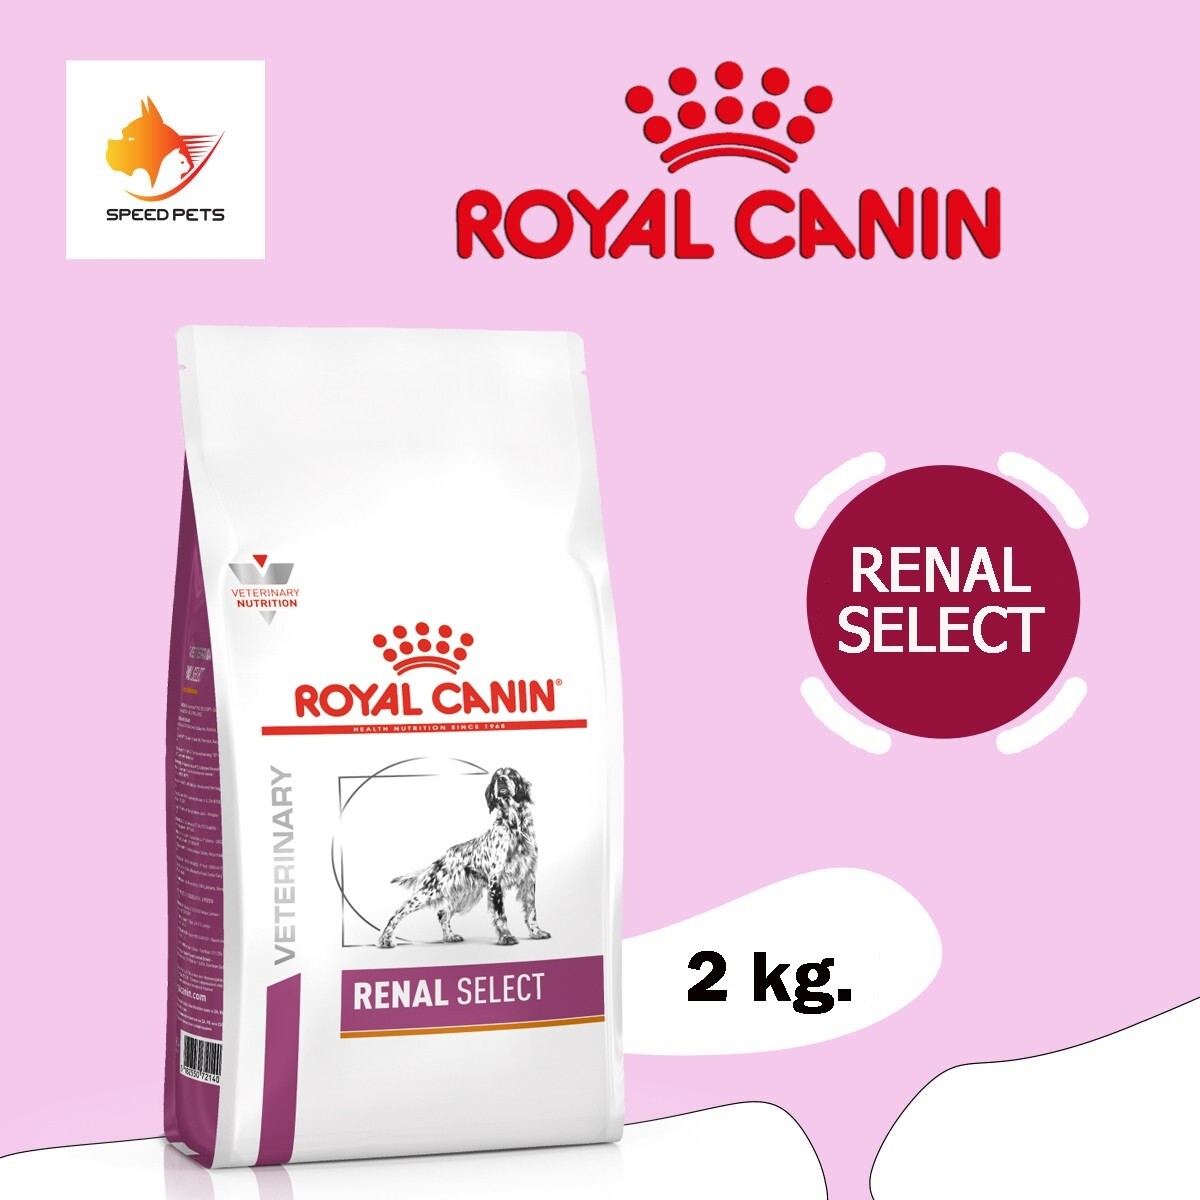 Royal canin Renal Select dog 2kg โรยัล คานิน อาหารสุนัข อาหารสุนัขโรคไต อาหารสุนัขไต ซีเล็ค 2กก.